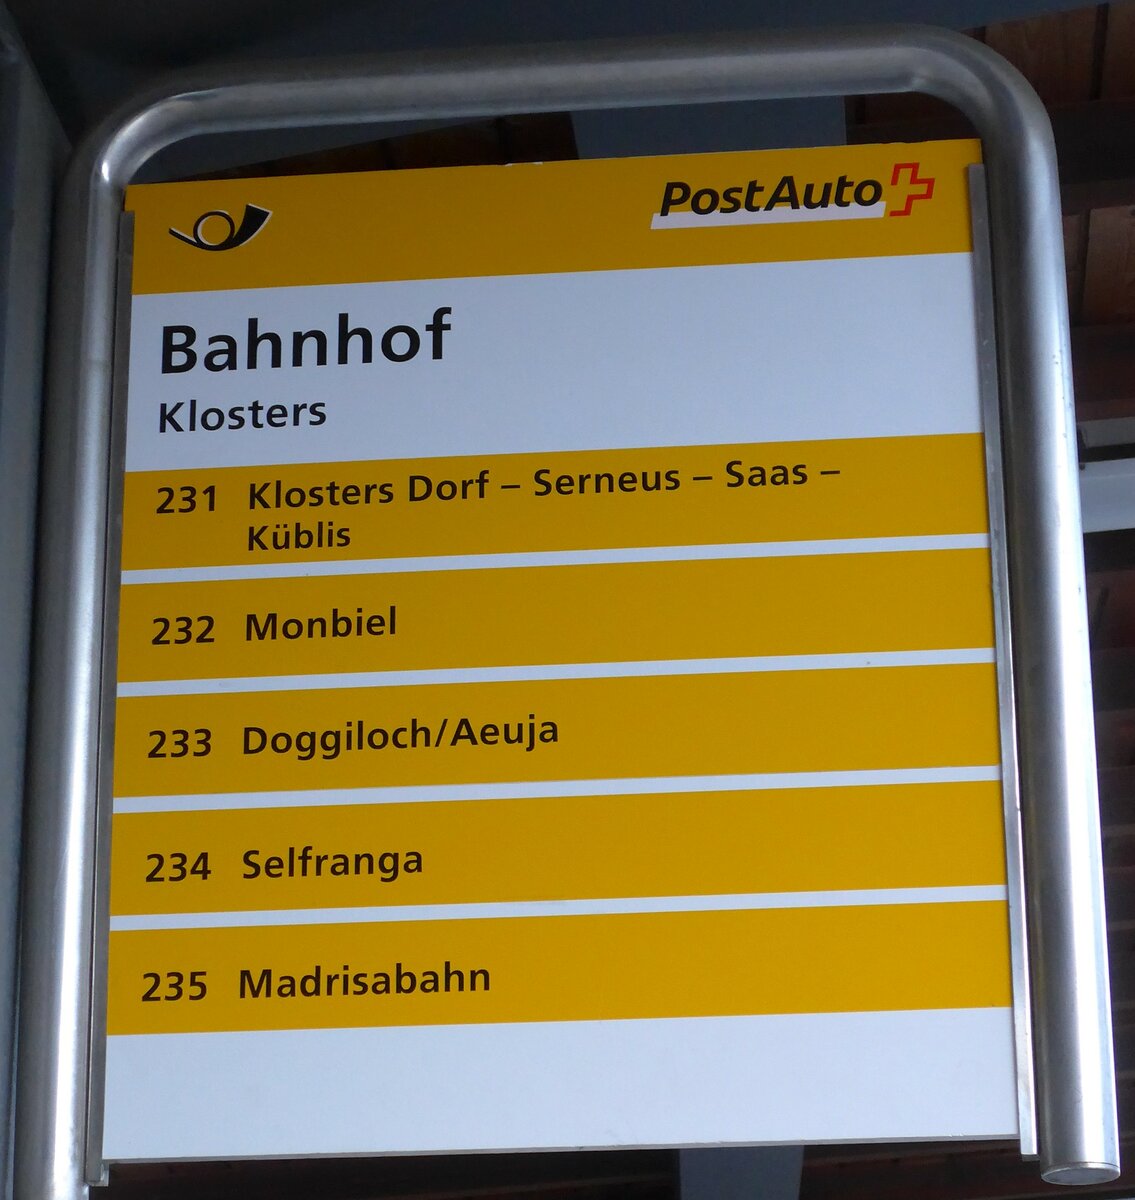 (167'776) - PostAuto-Haltestellenschild - Klosters, Bahnhof - am 19. Dezember 2015